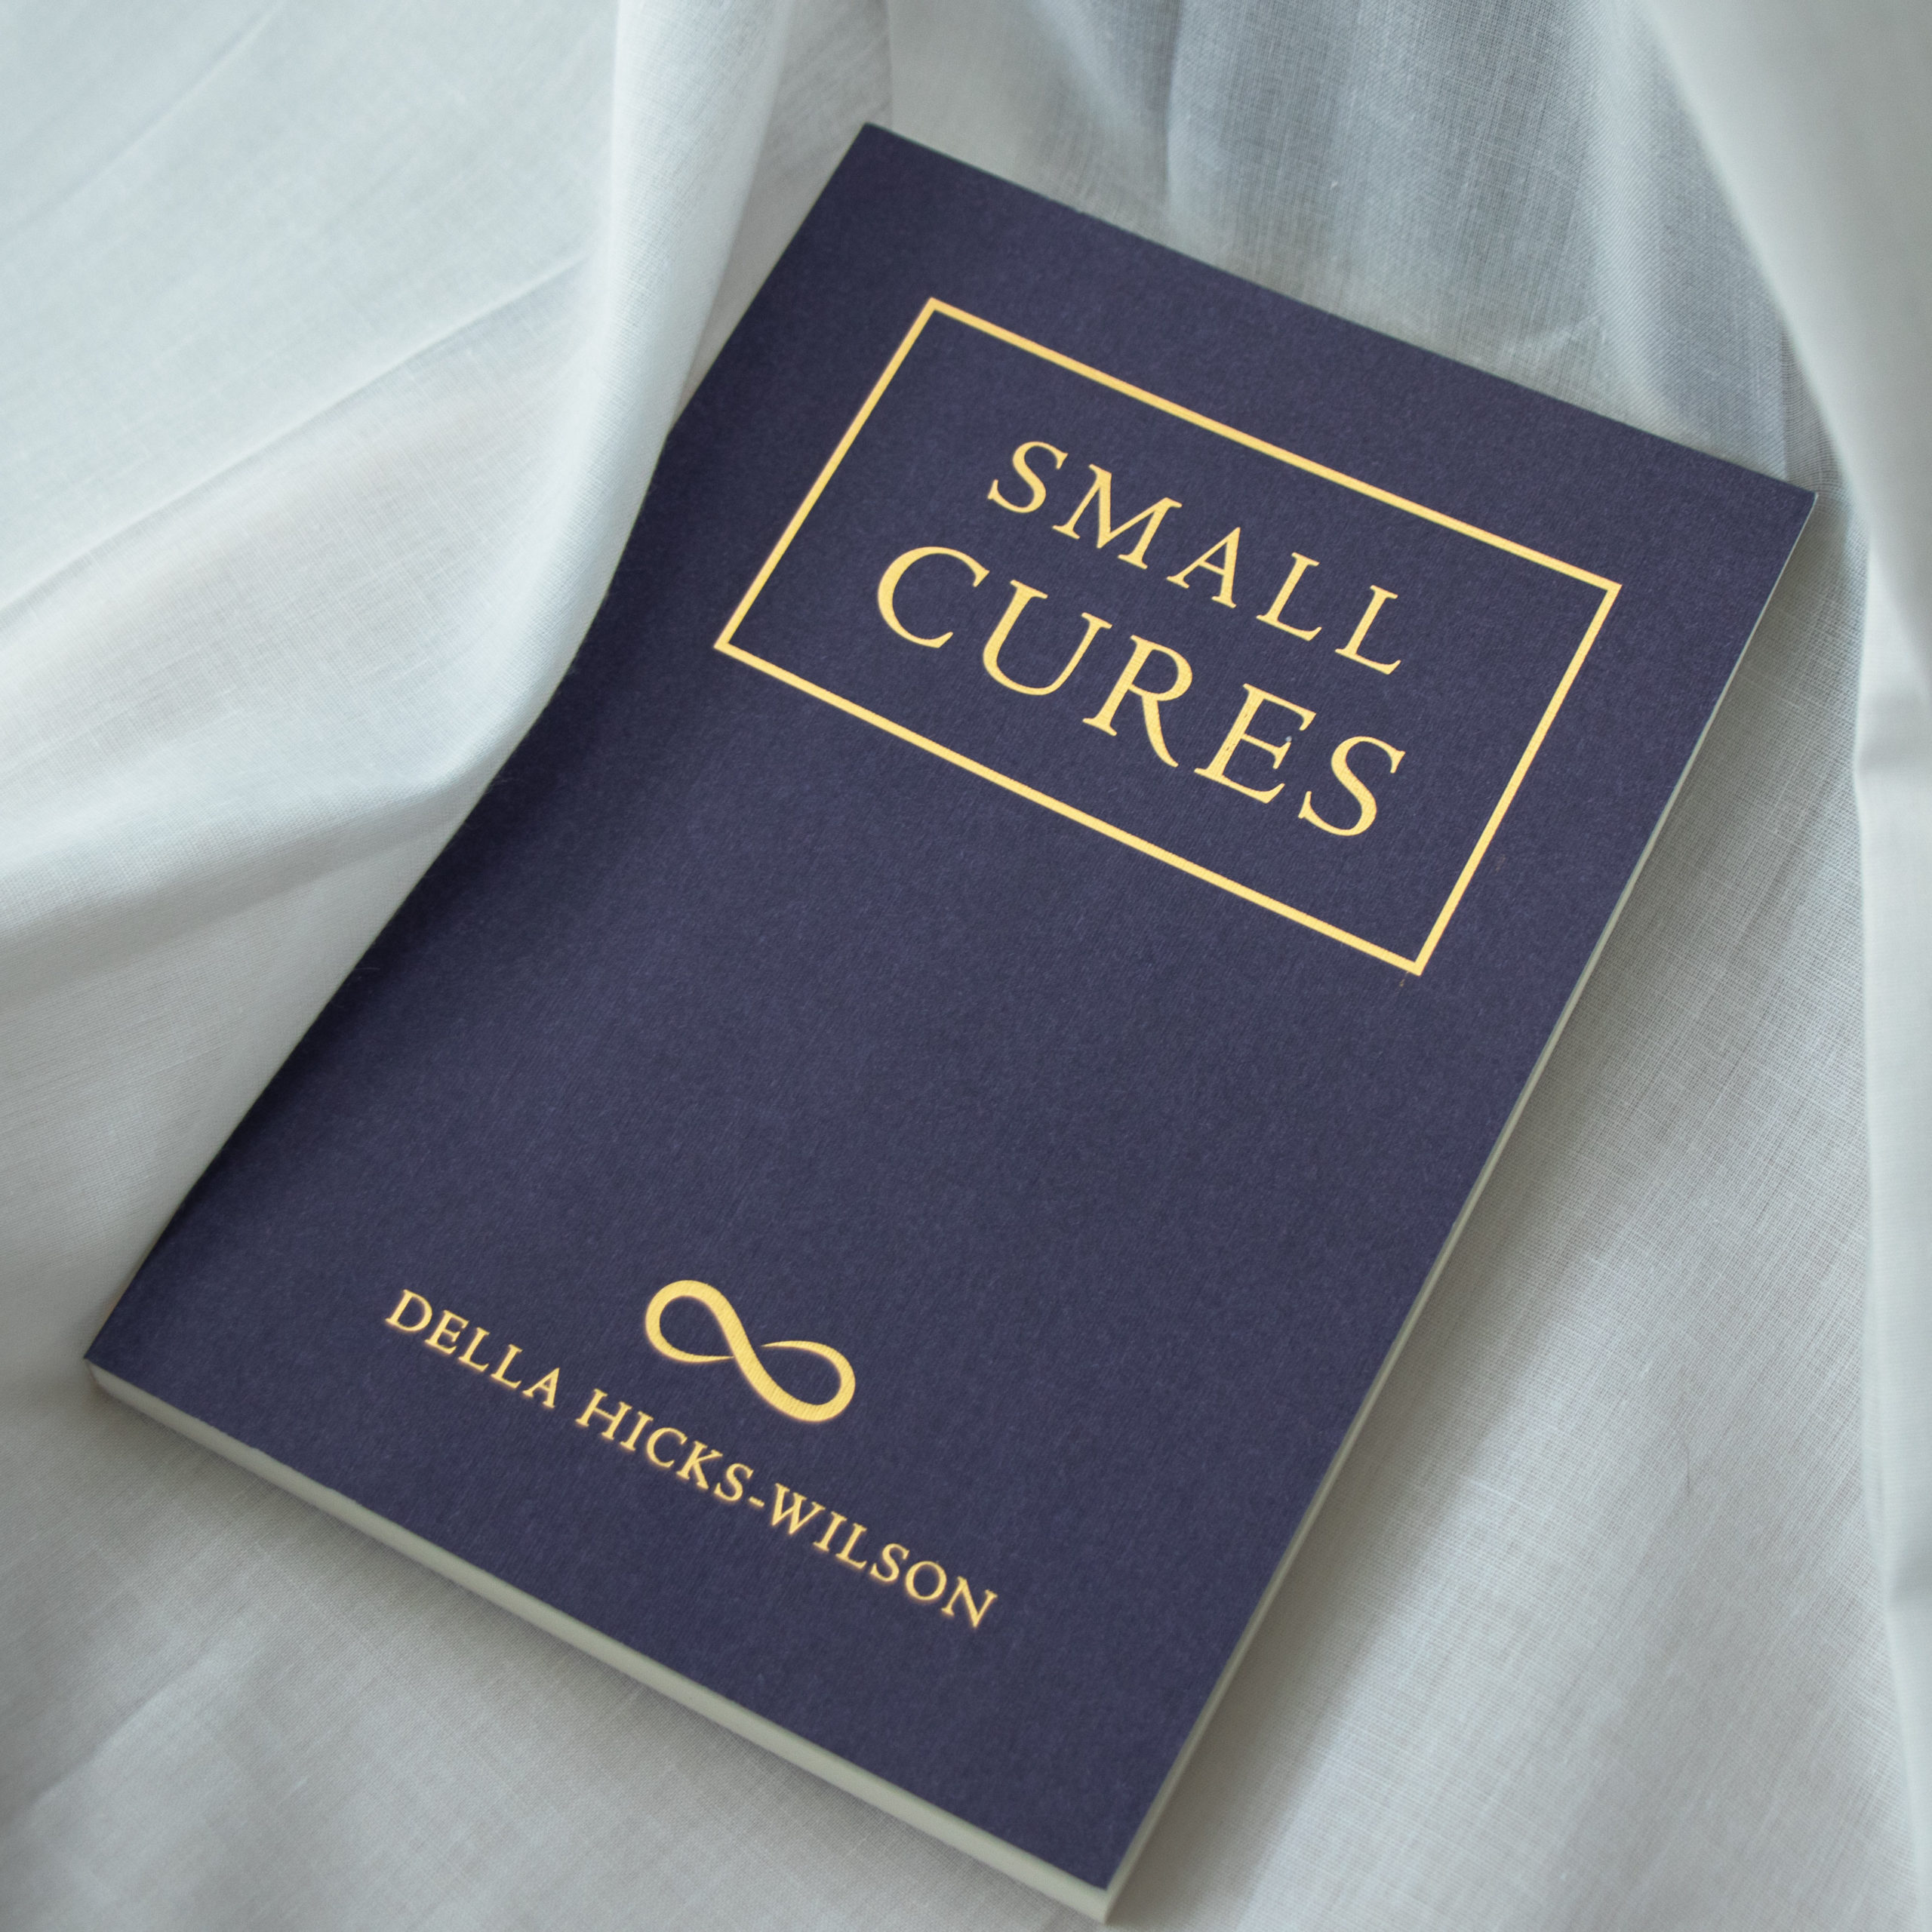 Small Cures by Della Hicks-Wilson